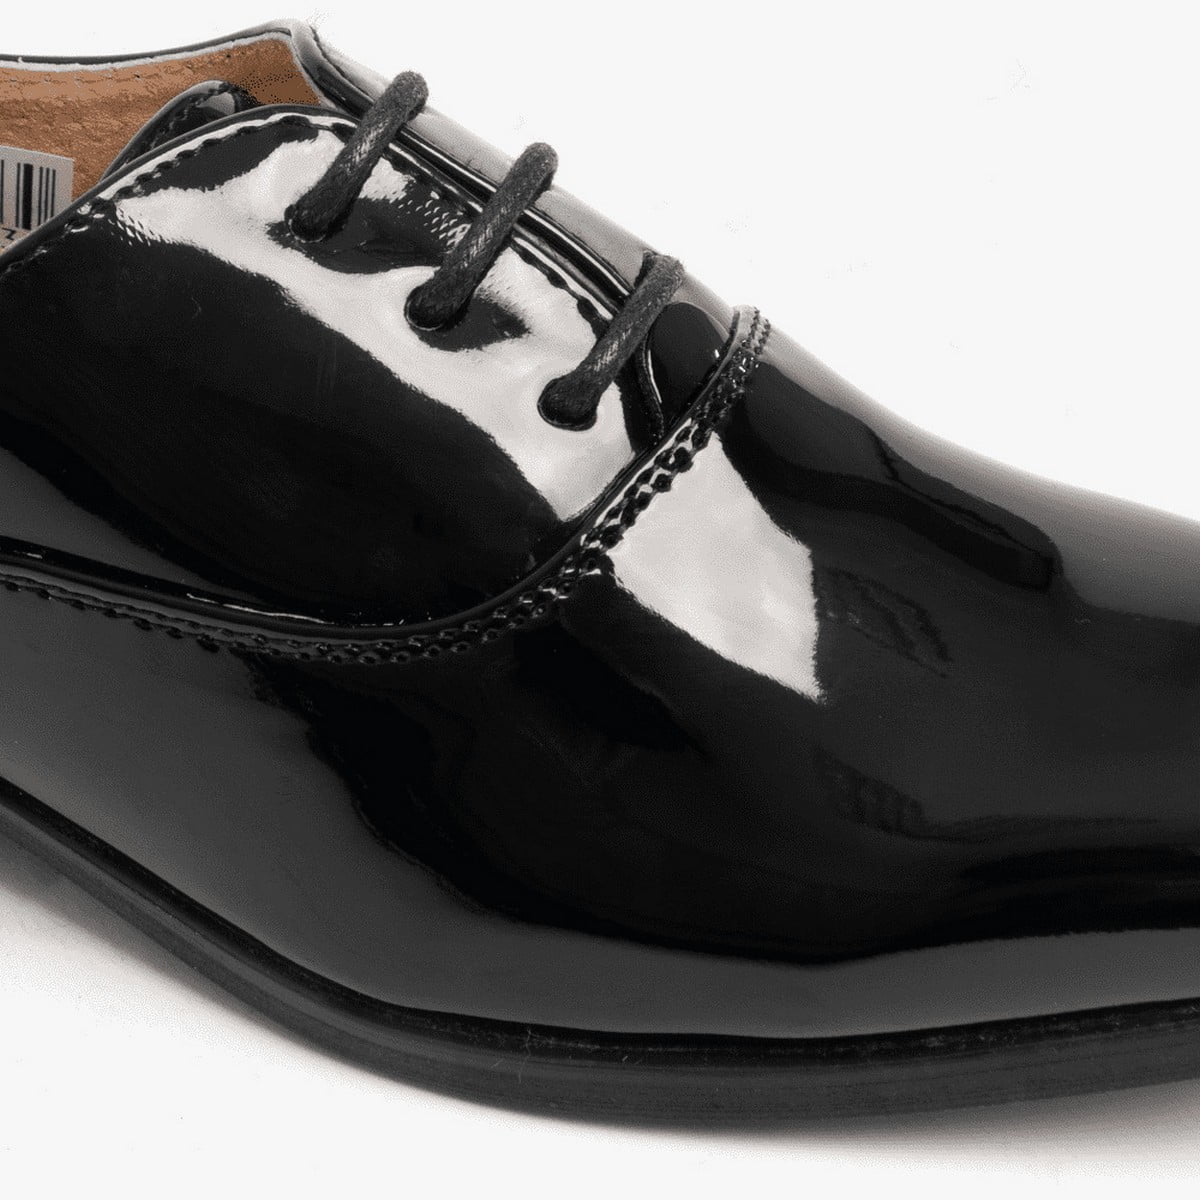 Boys Lace Oxford Tie Up Patent Black Shoes